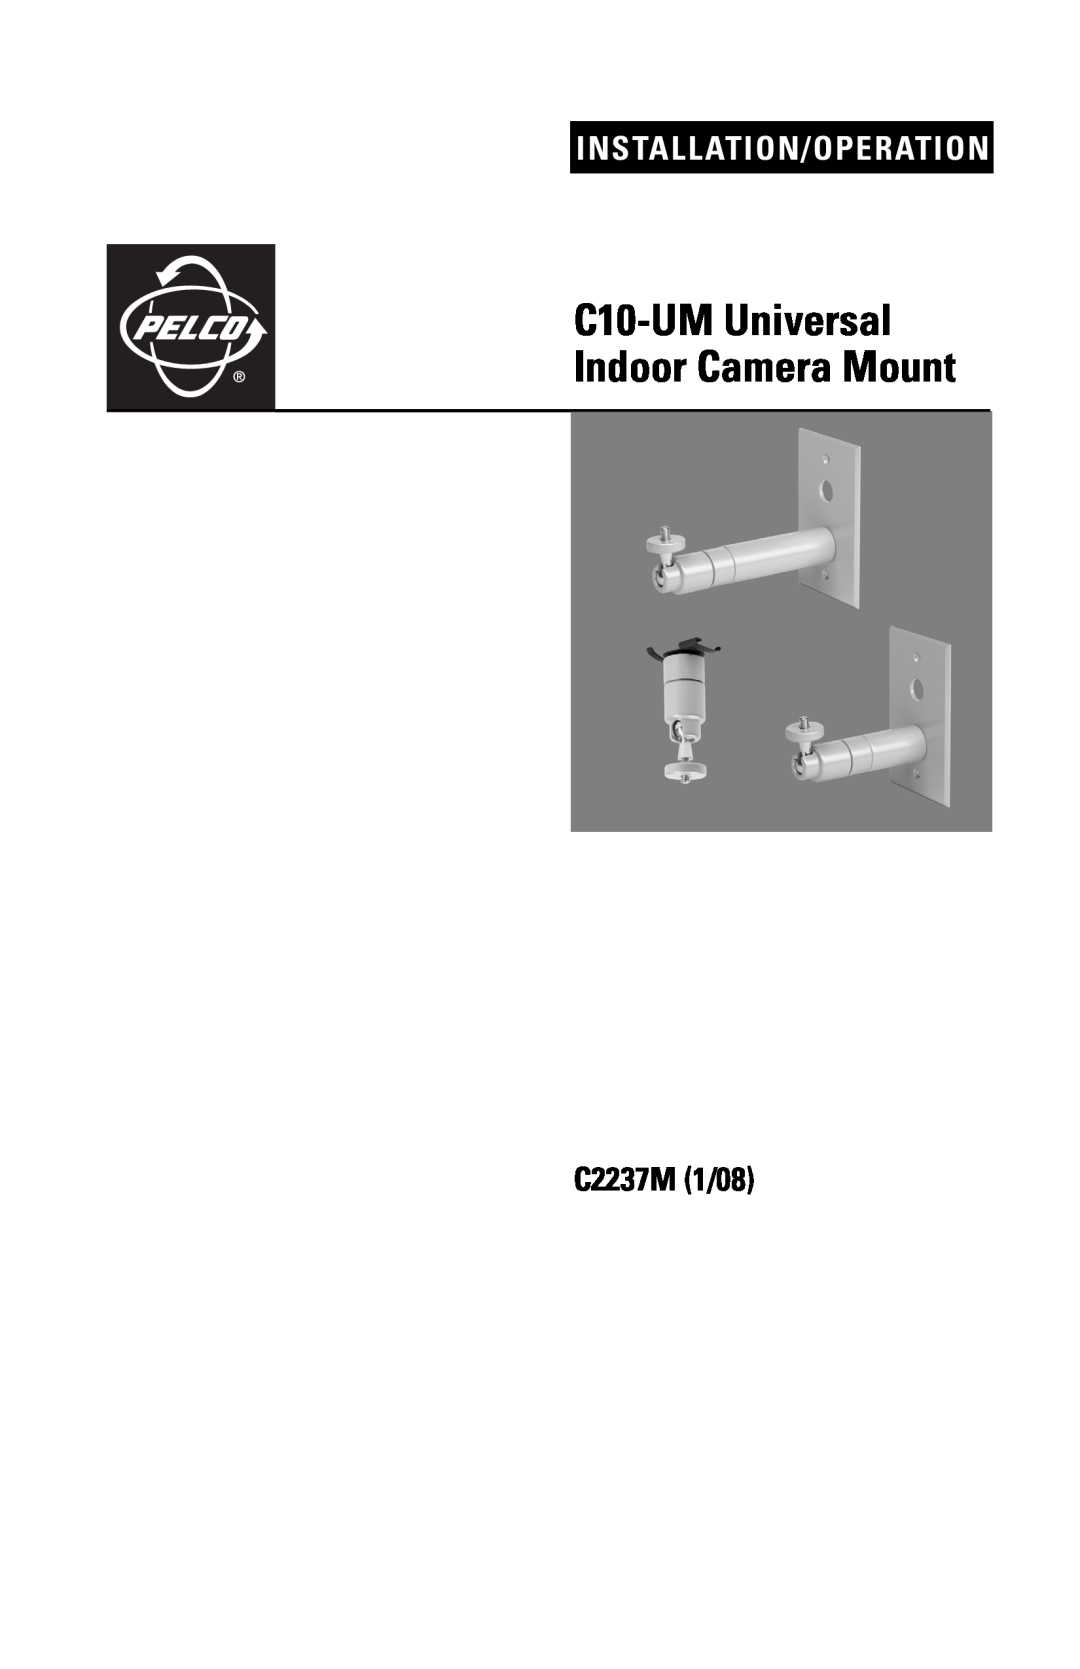 Pelco manual C2237M 1/08, C10-UMUniversal Indoor Camera Mount, Installation/Operation 